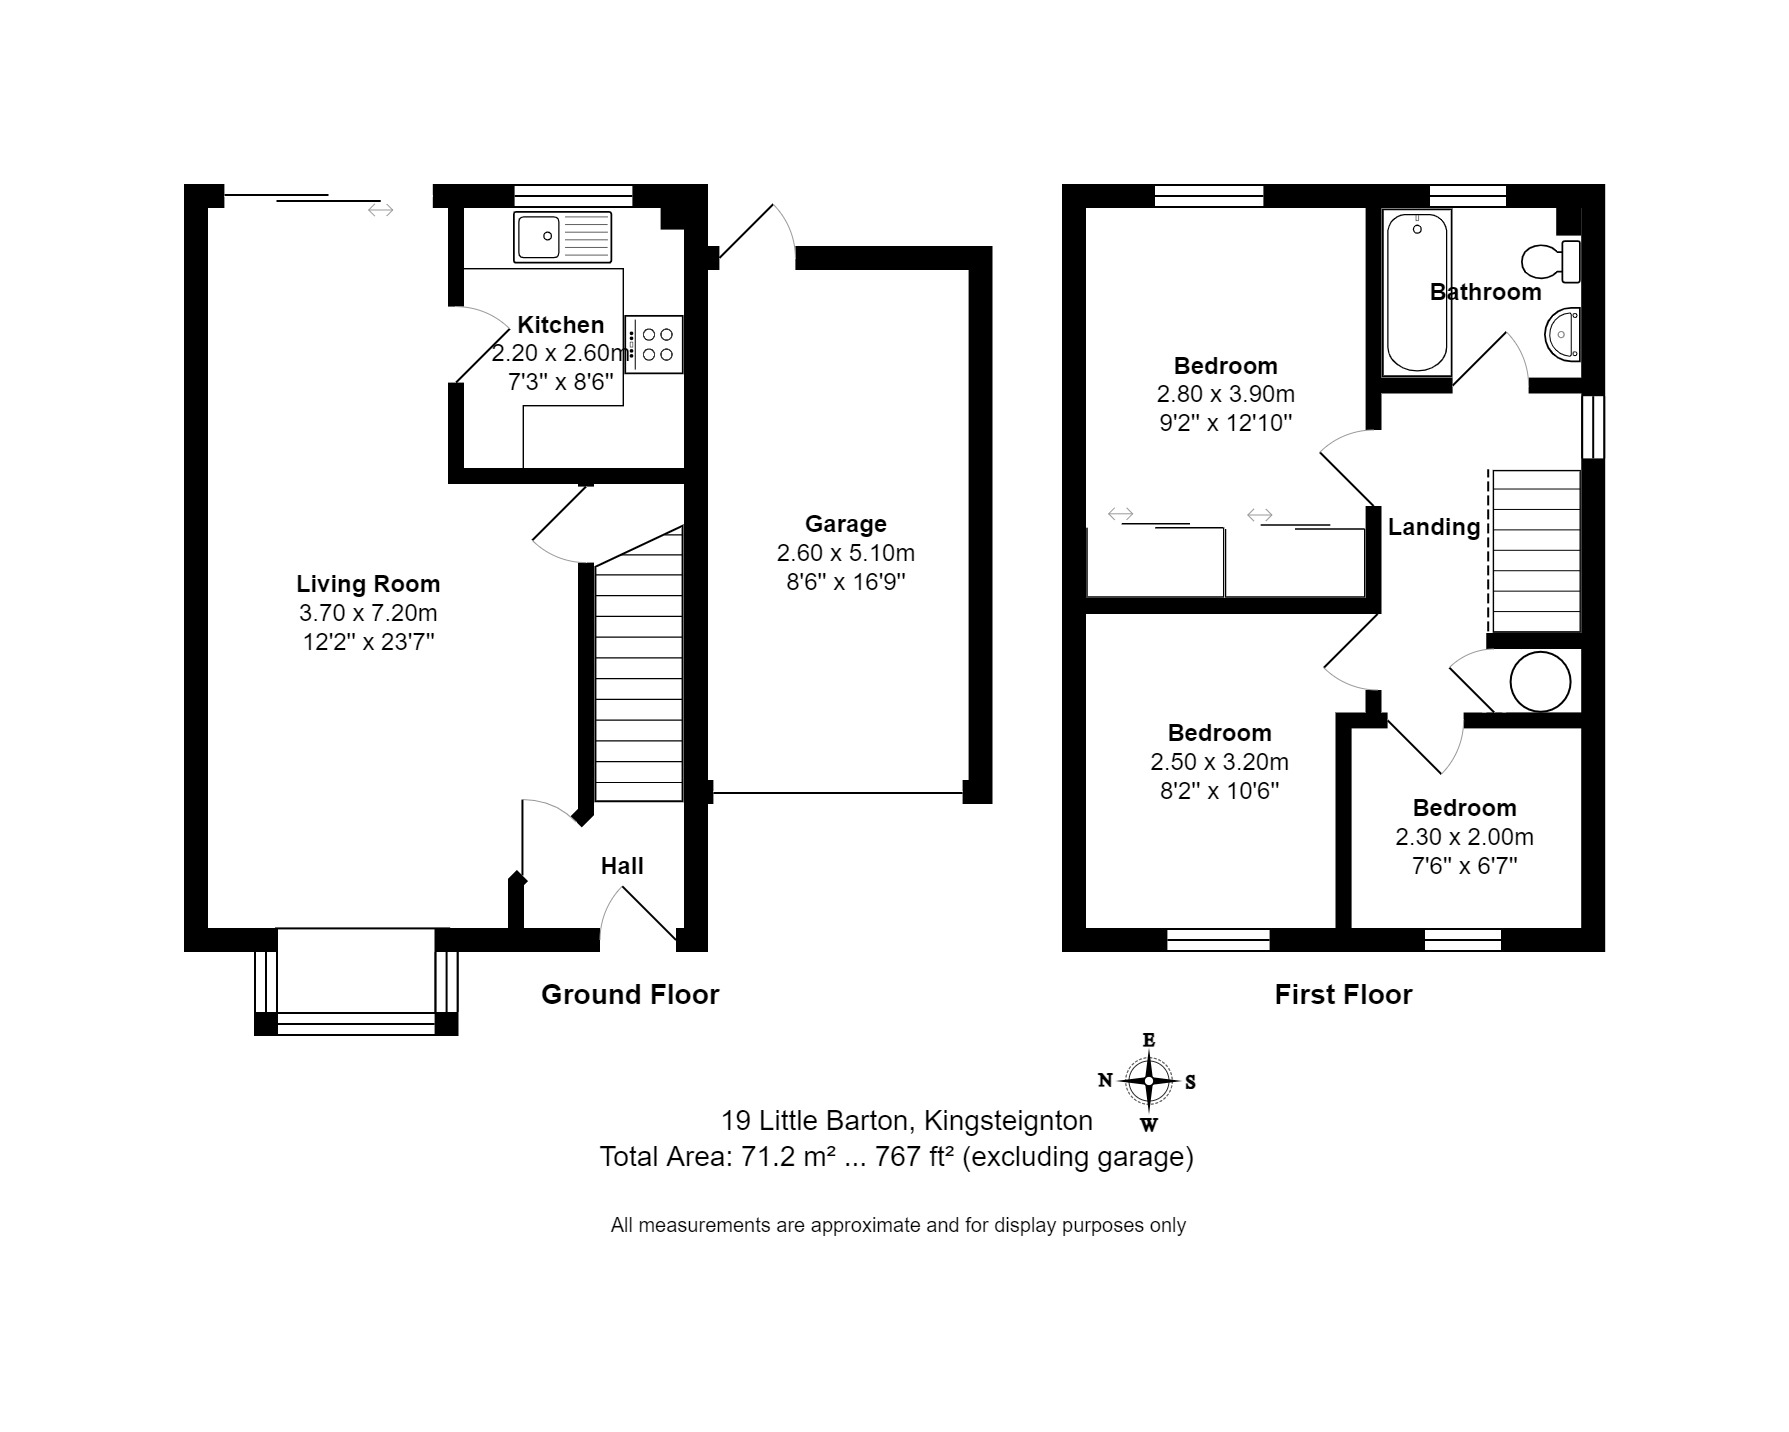 3 bed end of terrace house for sale in Little Barton, Kingsteignton - Property floorplan